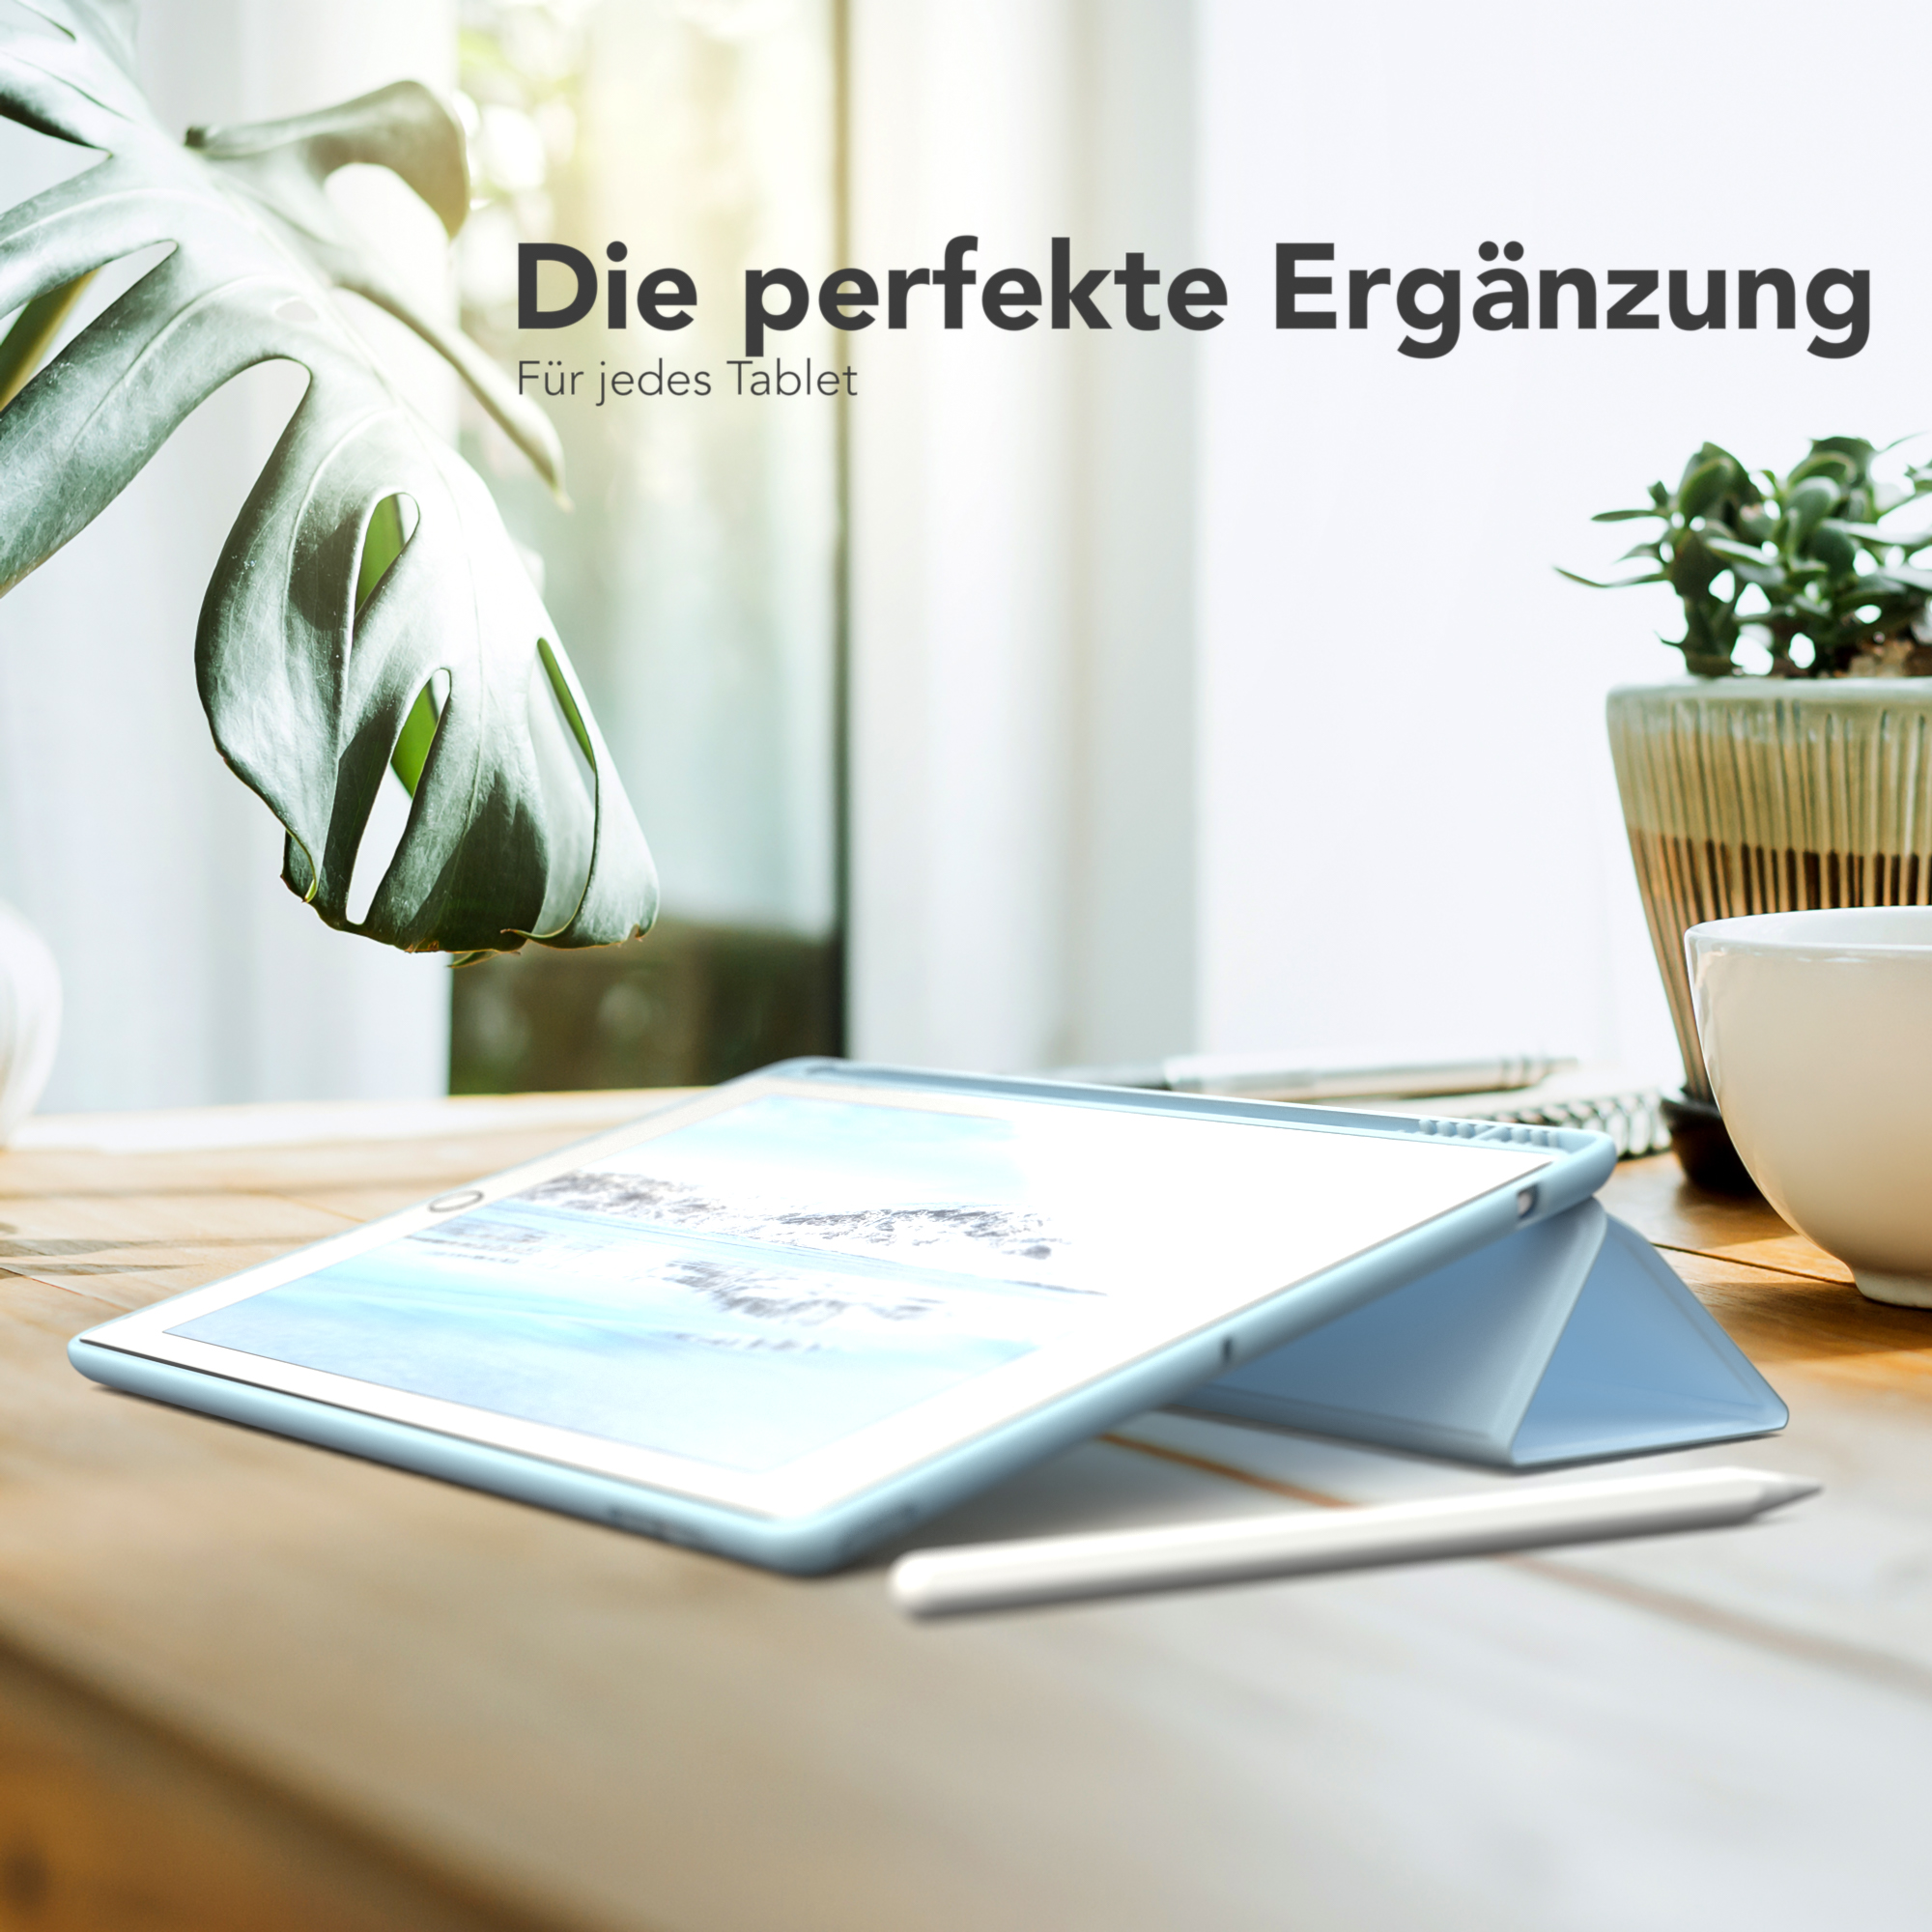 EAZY CASE Smartcase mit Stifthalter 6. Hellblau Apple Bookcover 2017 / Blau / /2018 für Generation Kunstleder, iPad 5. Tablethülle